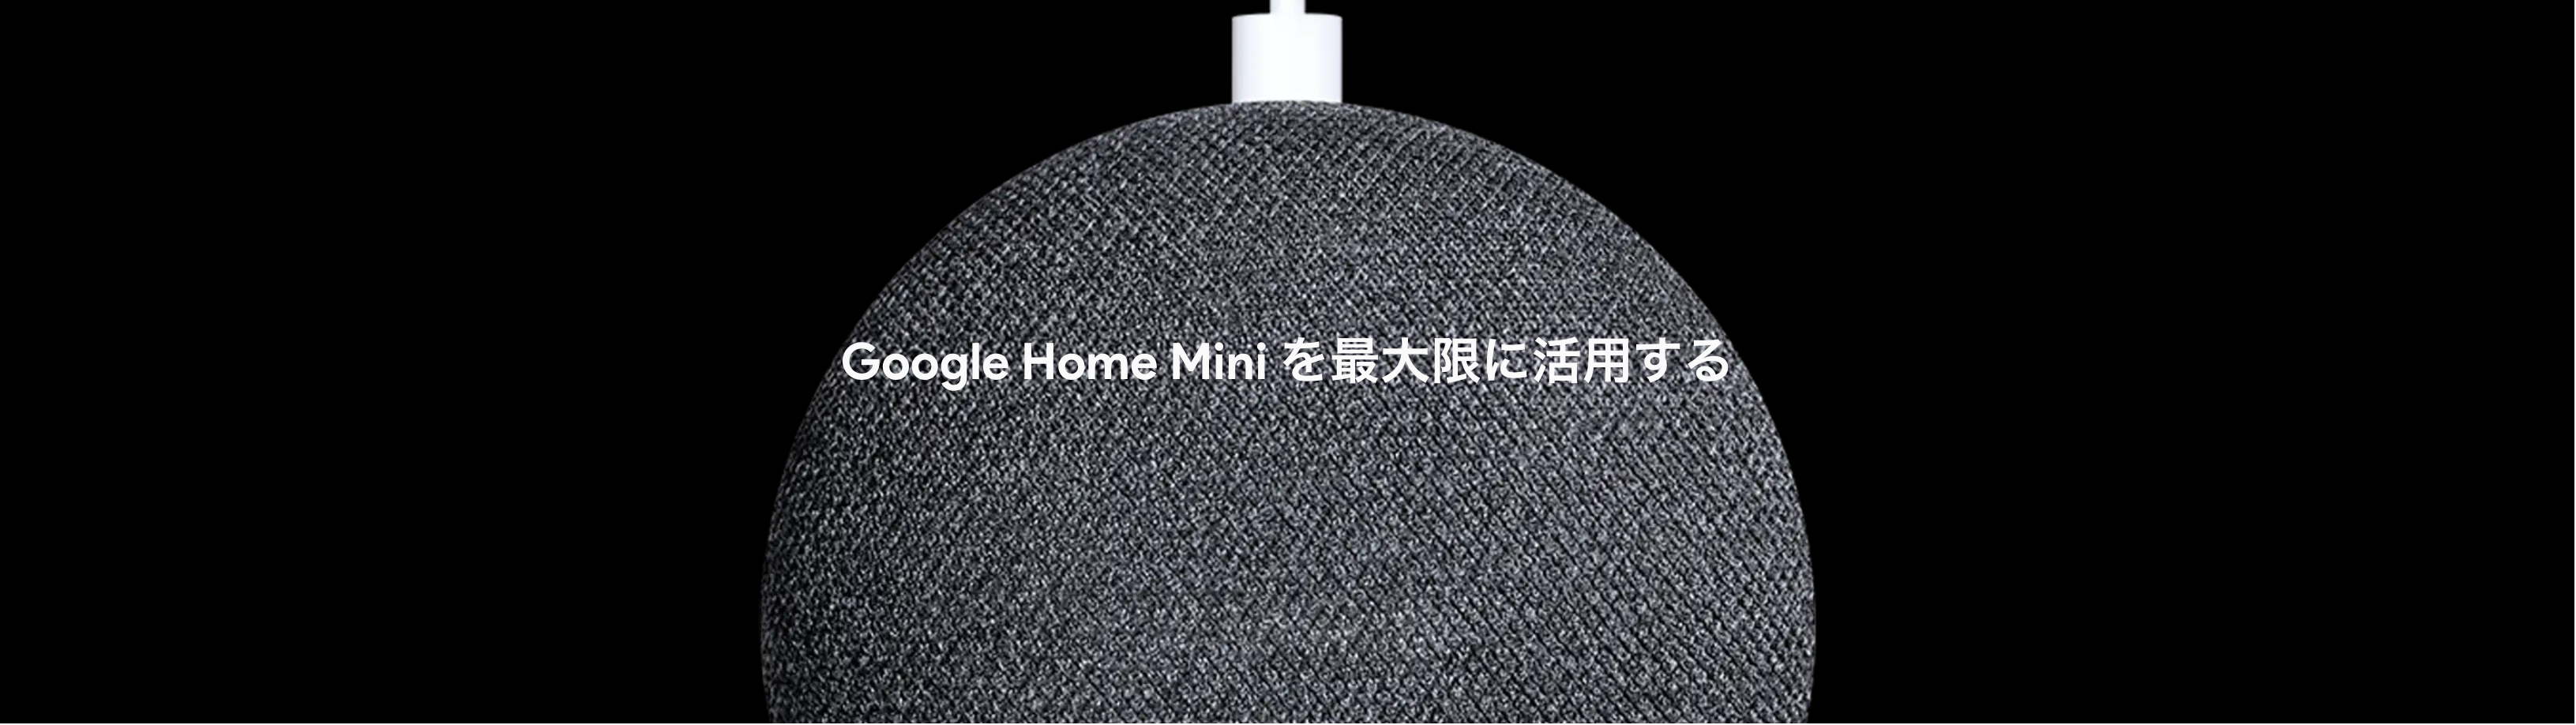 Google Home miniをぶら下げてみた | RingZero株式会社